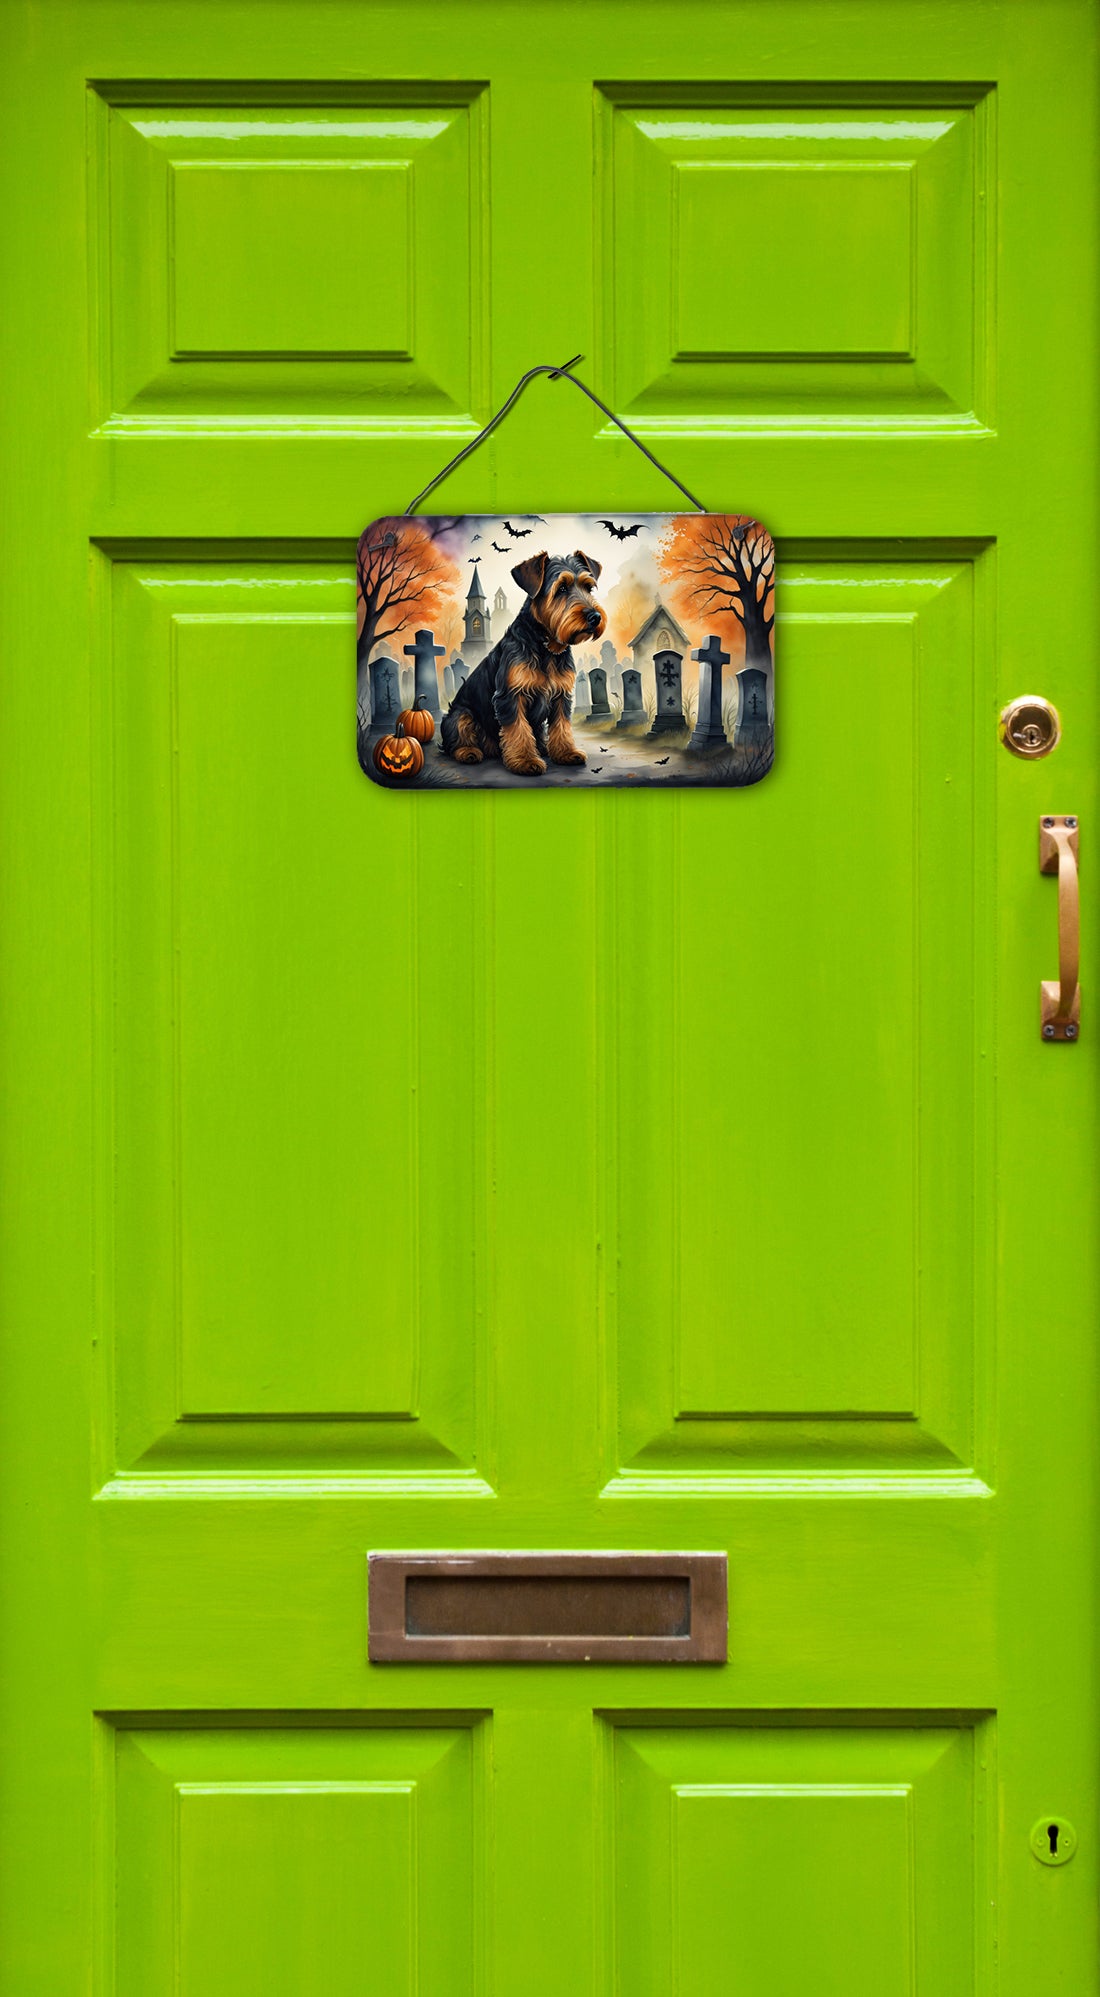 Buy this Airedale Terrier Spooky Halloween Wall or Door Hanging Prints